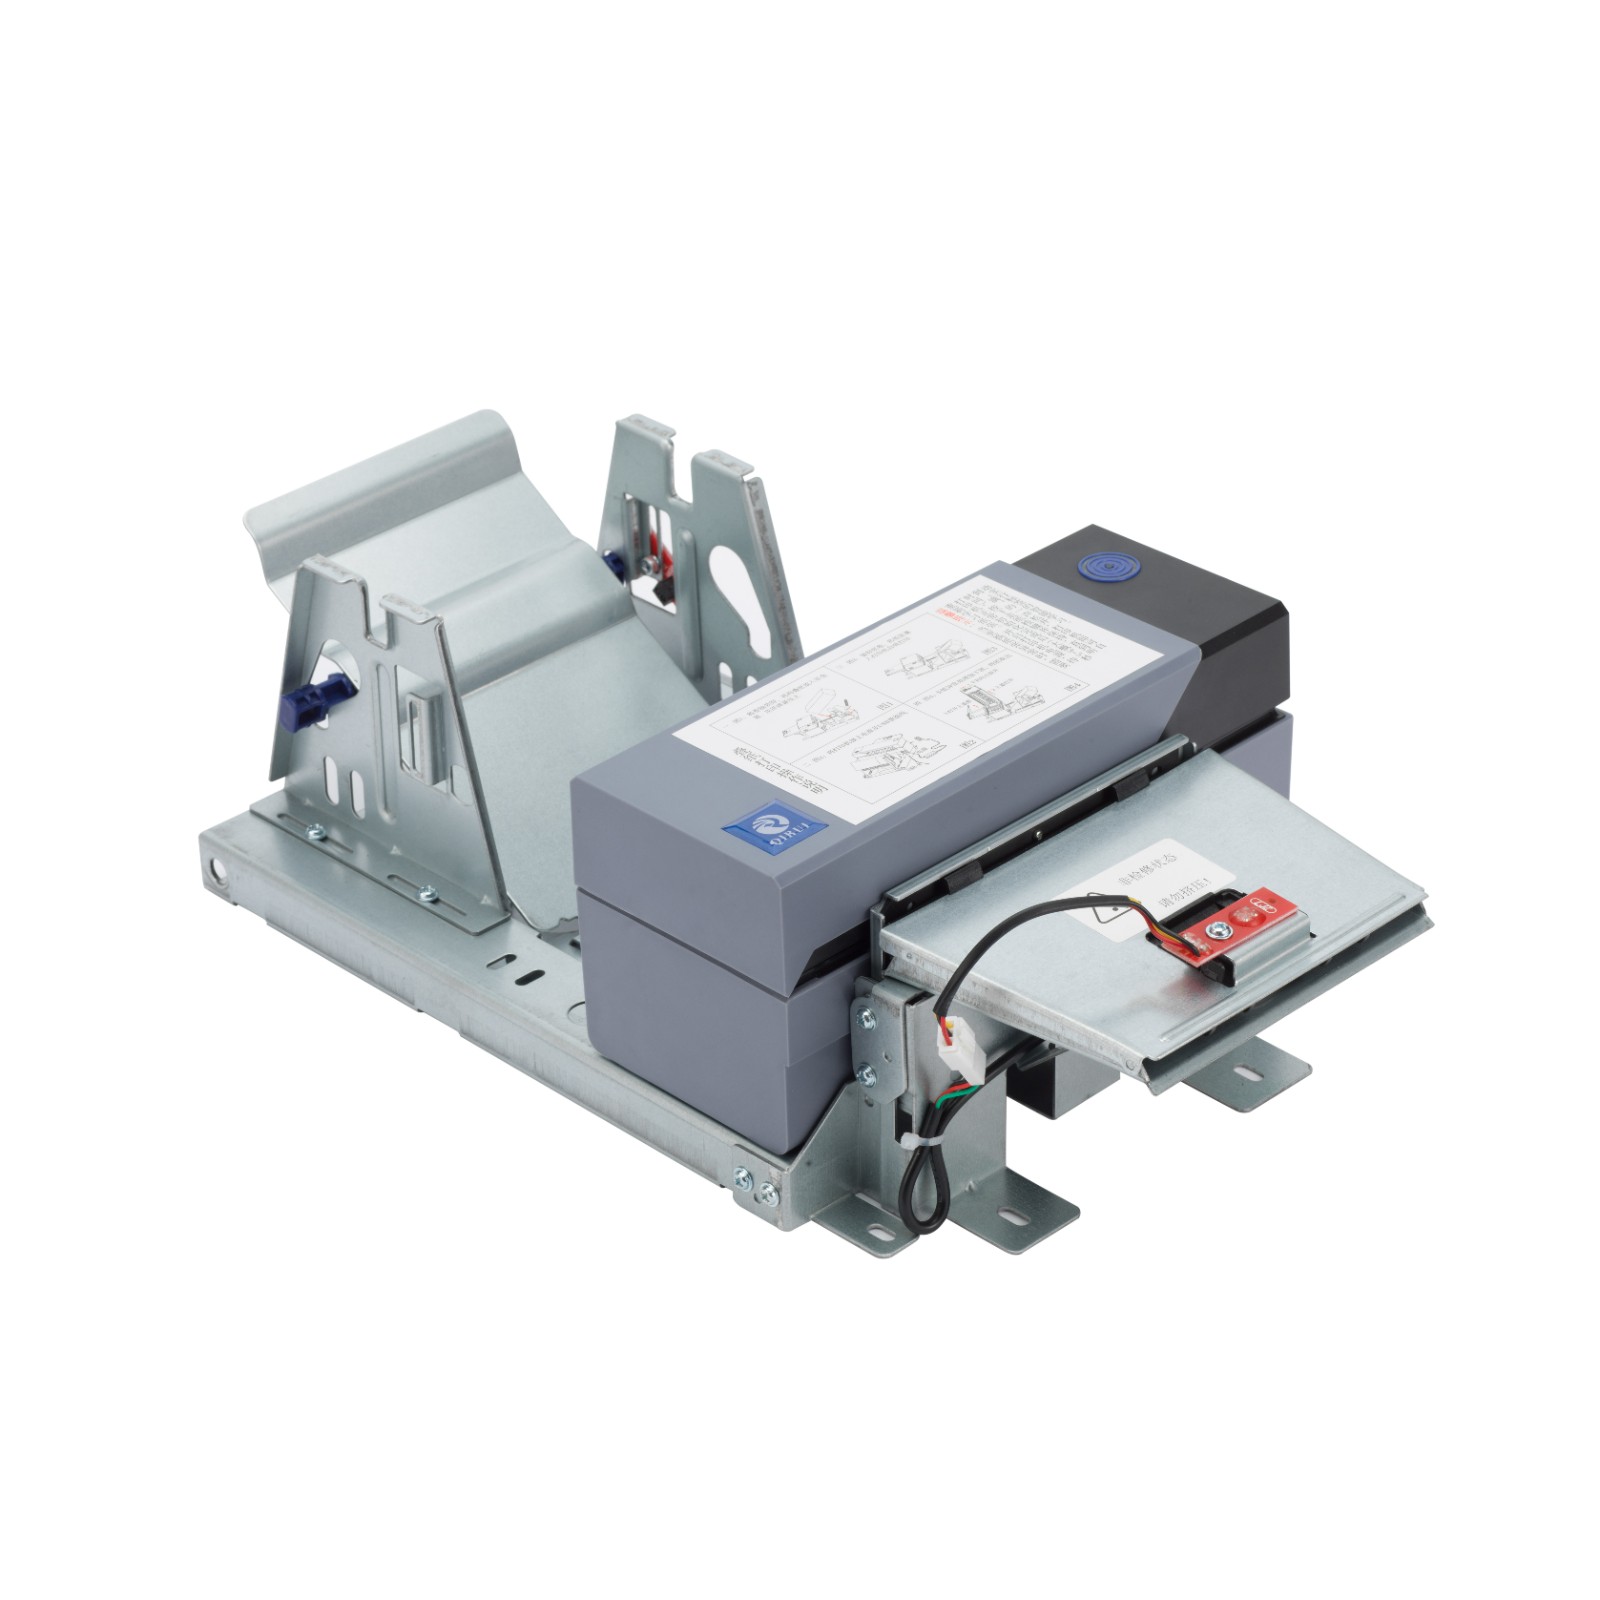 Impresora de etiquetas para quiosco integrada de 4 pulgadas con cortador automático